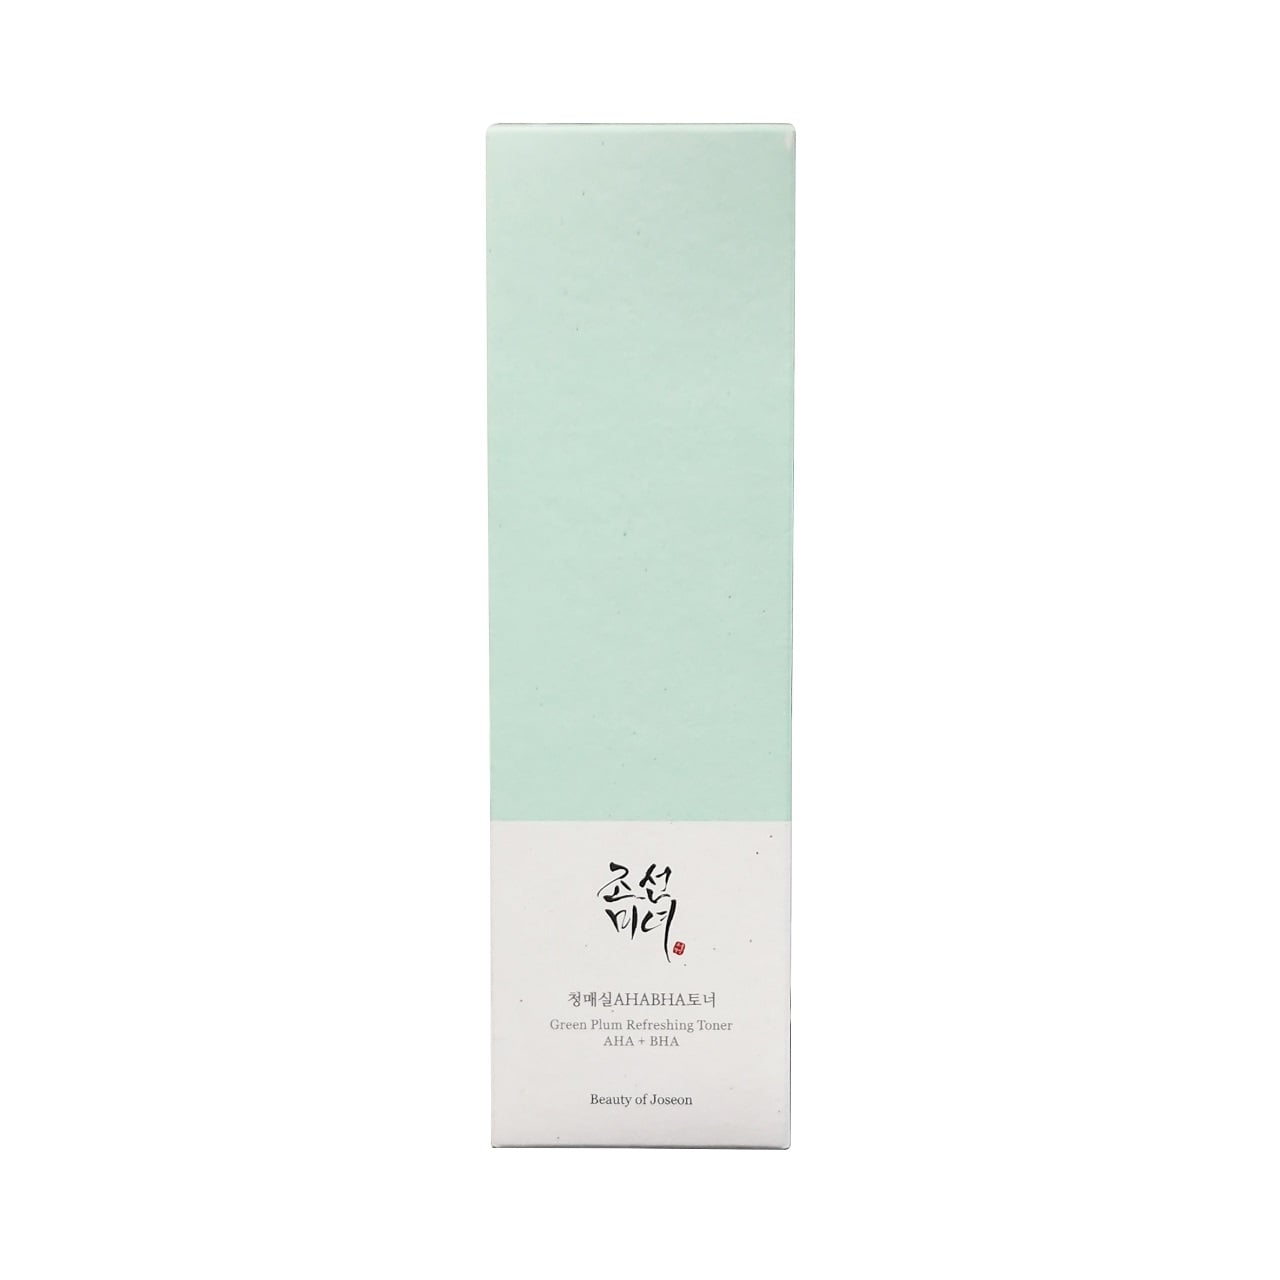 Product label for Beauty of Joseon Green Plum Refreshing Toner AHA BHA (150 mL)